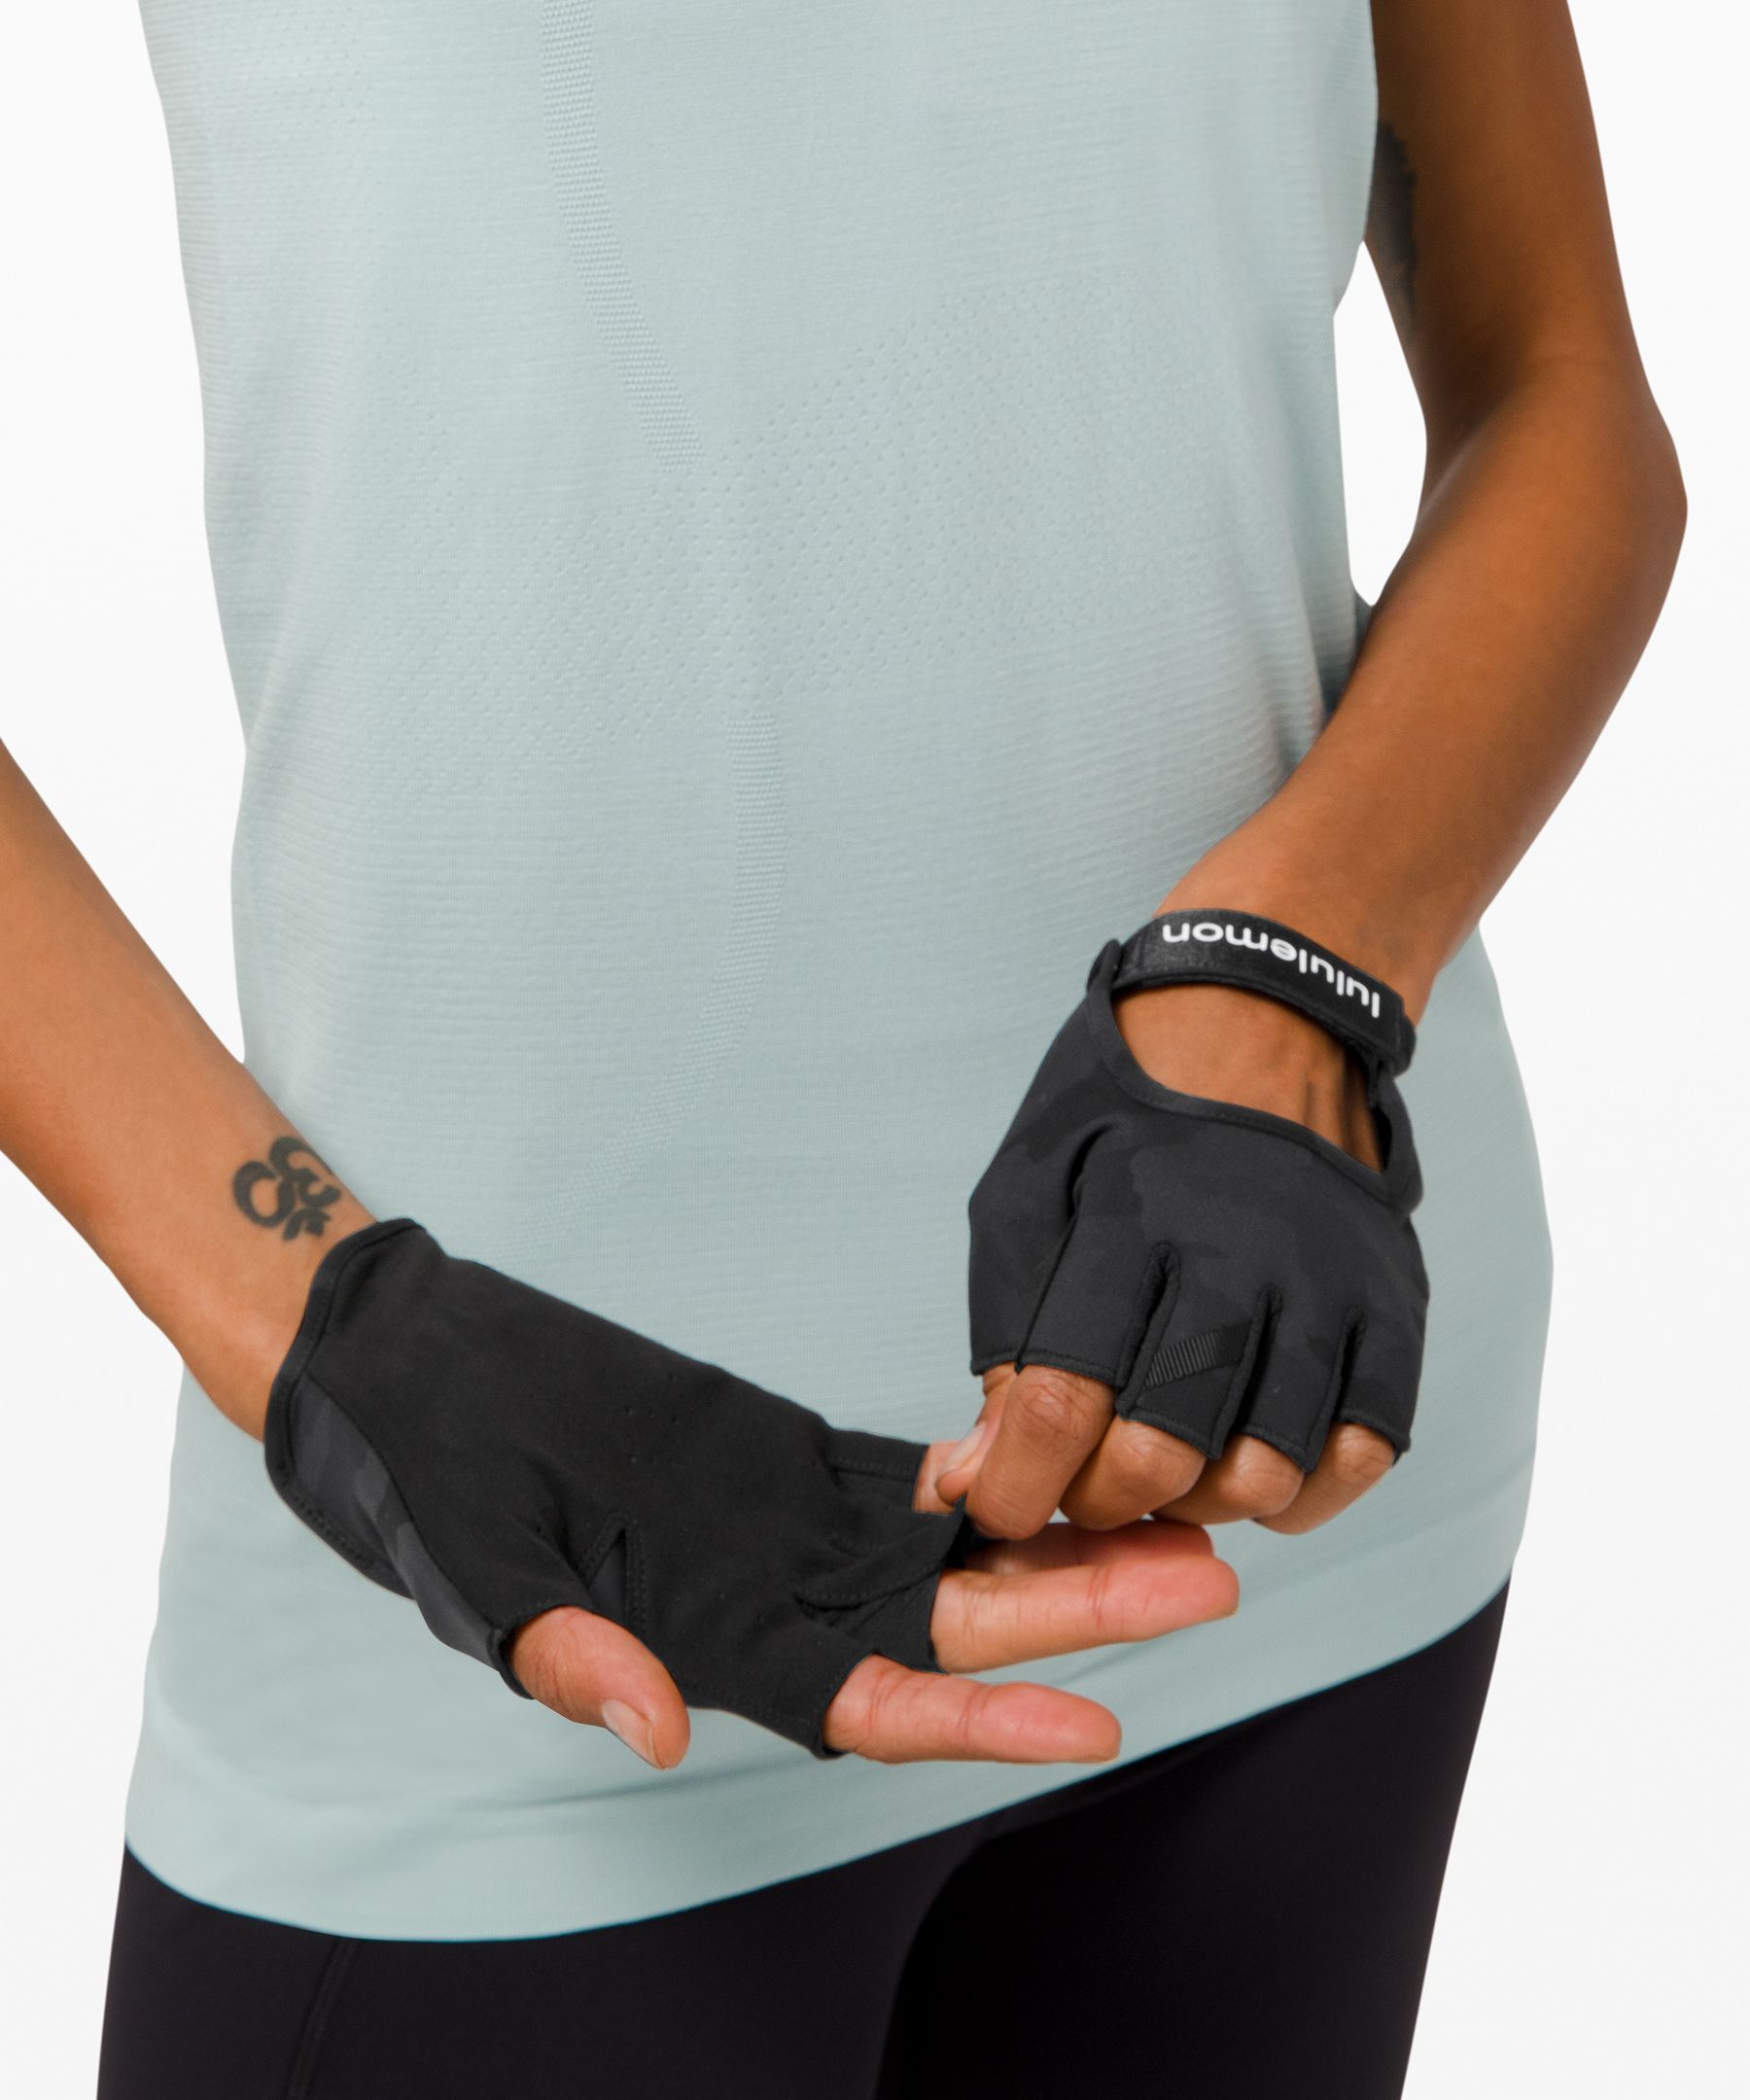 lululemon workout gloves